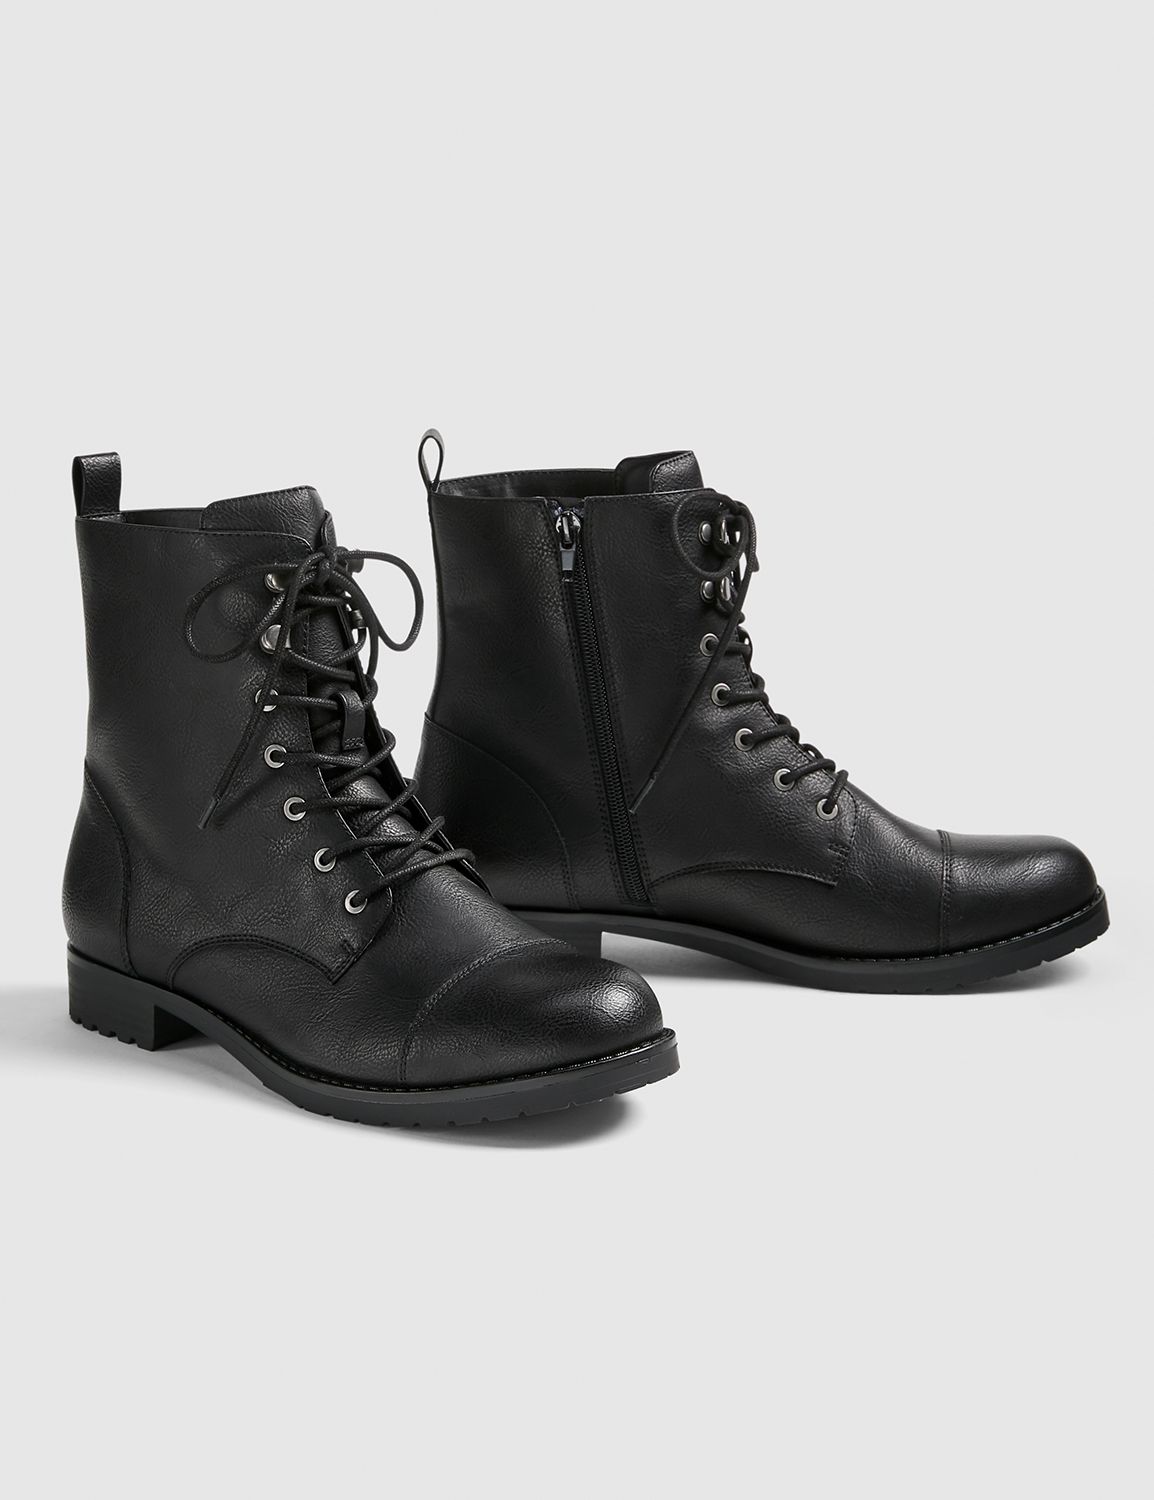 lane bryant boots on sale